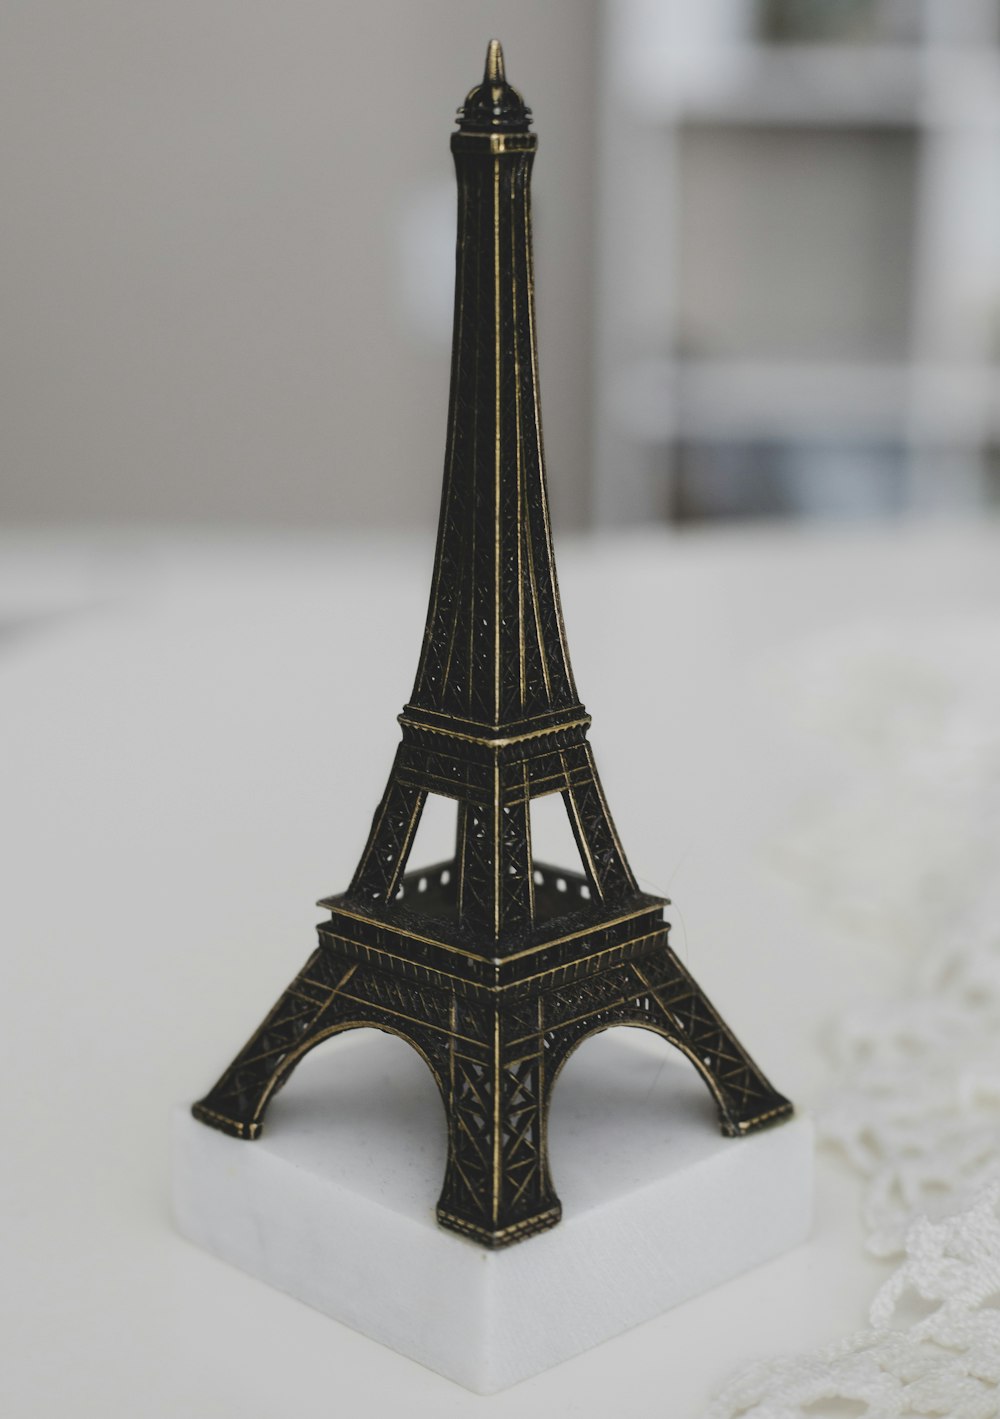 Miniatura della Torre Eiffel su superficie bianca